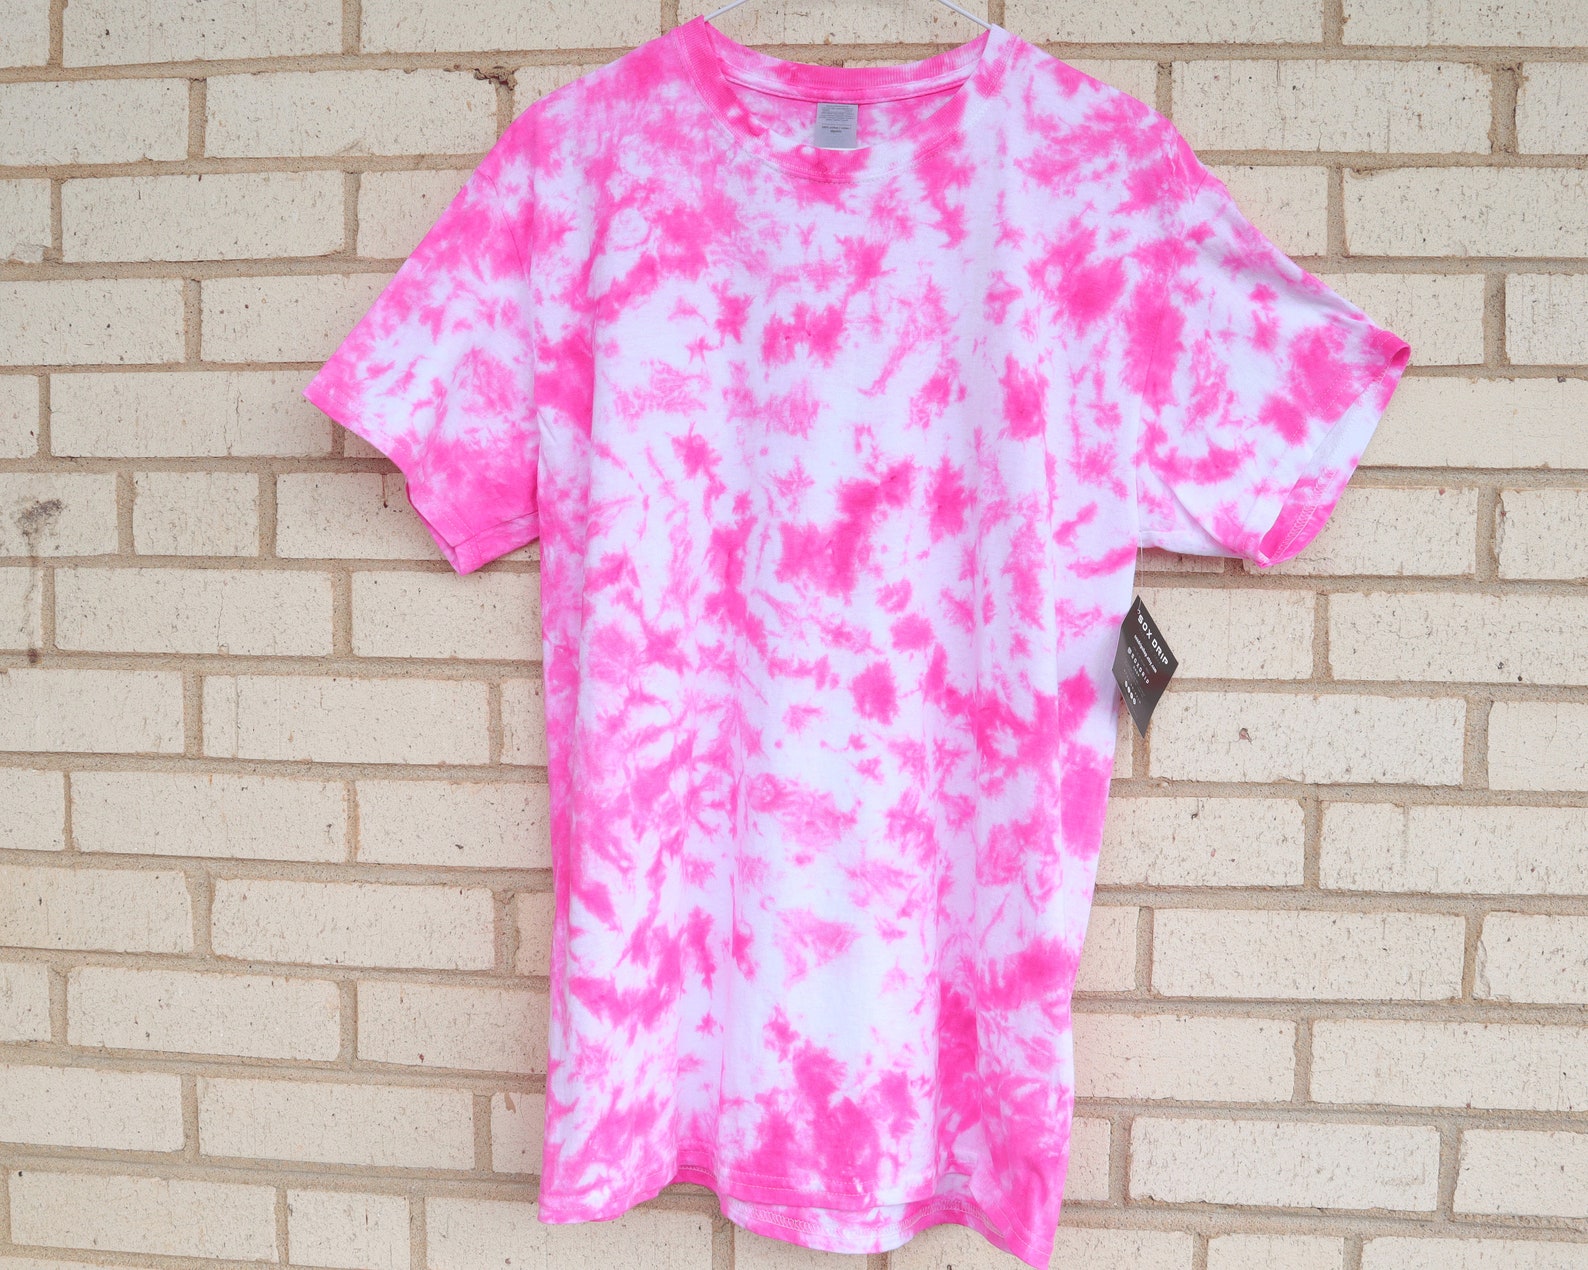 Pink Tie Dye Shirt Tye Dye Shirt Tye Dye Tie Dye T-Shirts | Etsy